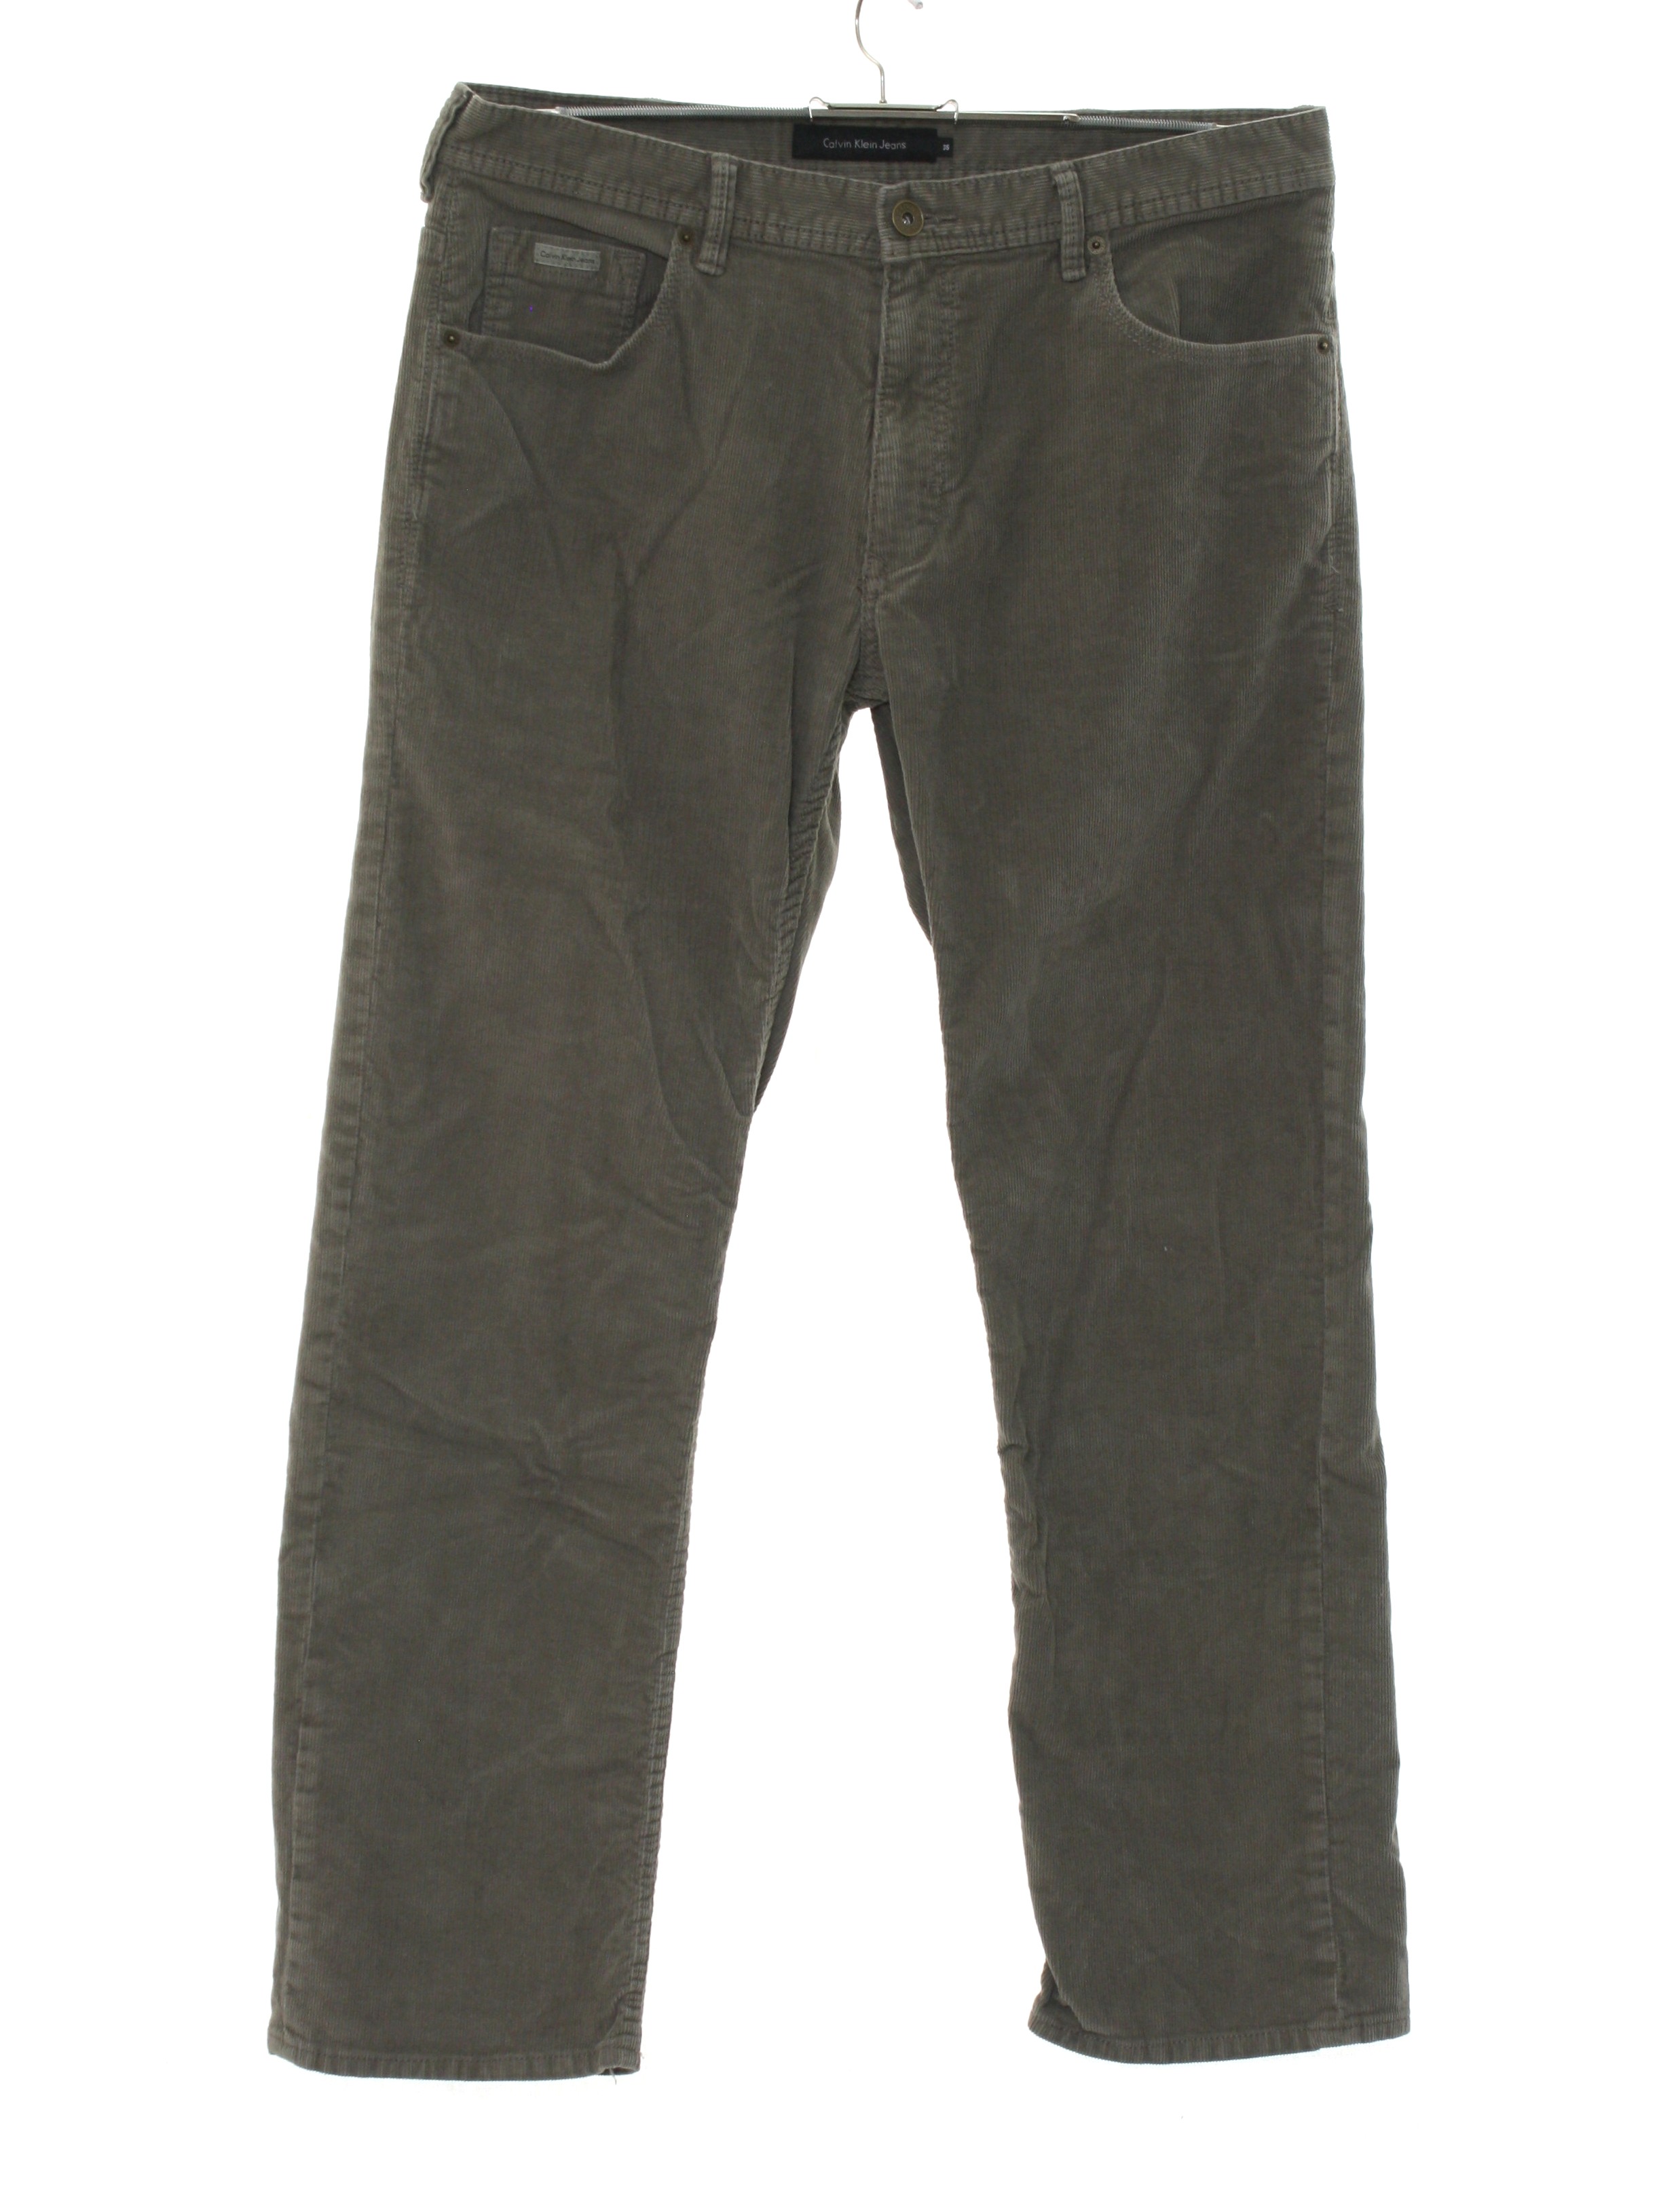 grey corduroy pants mens